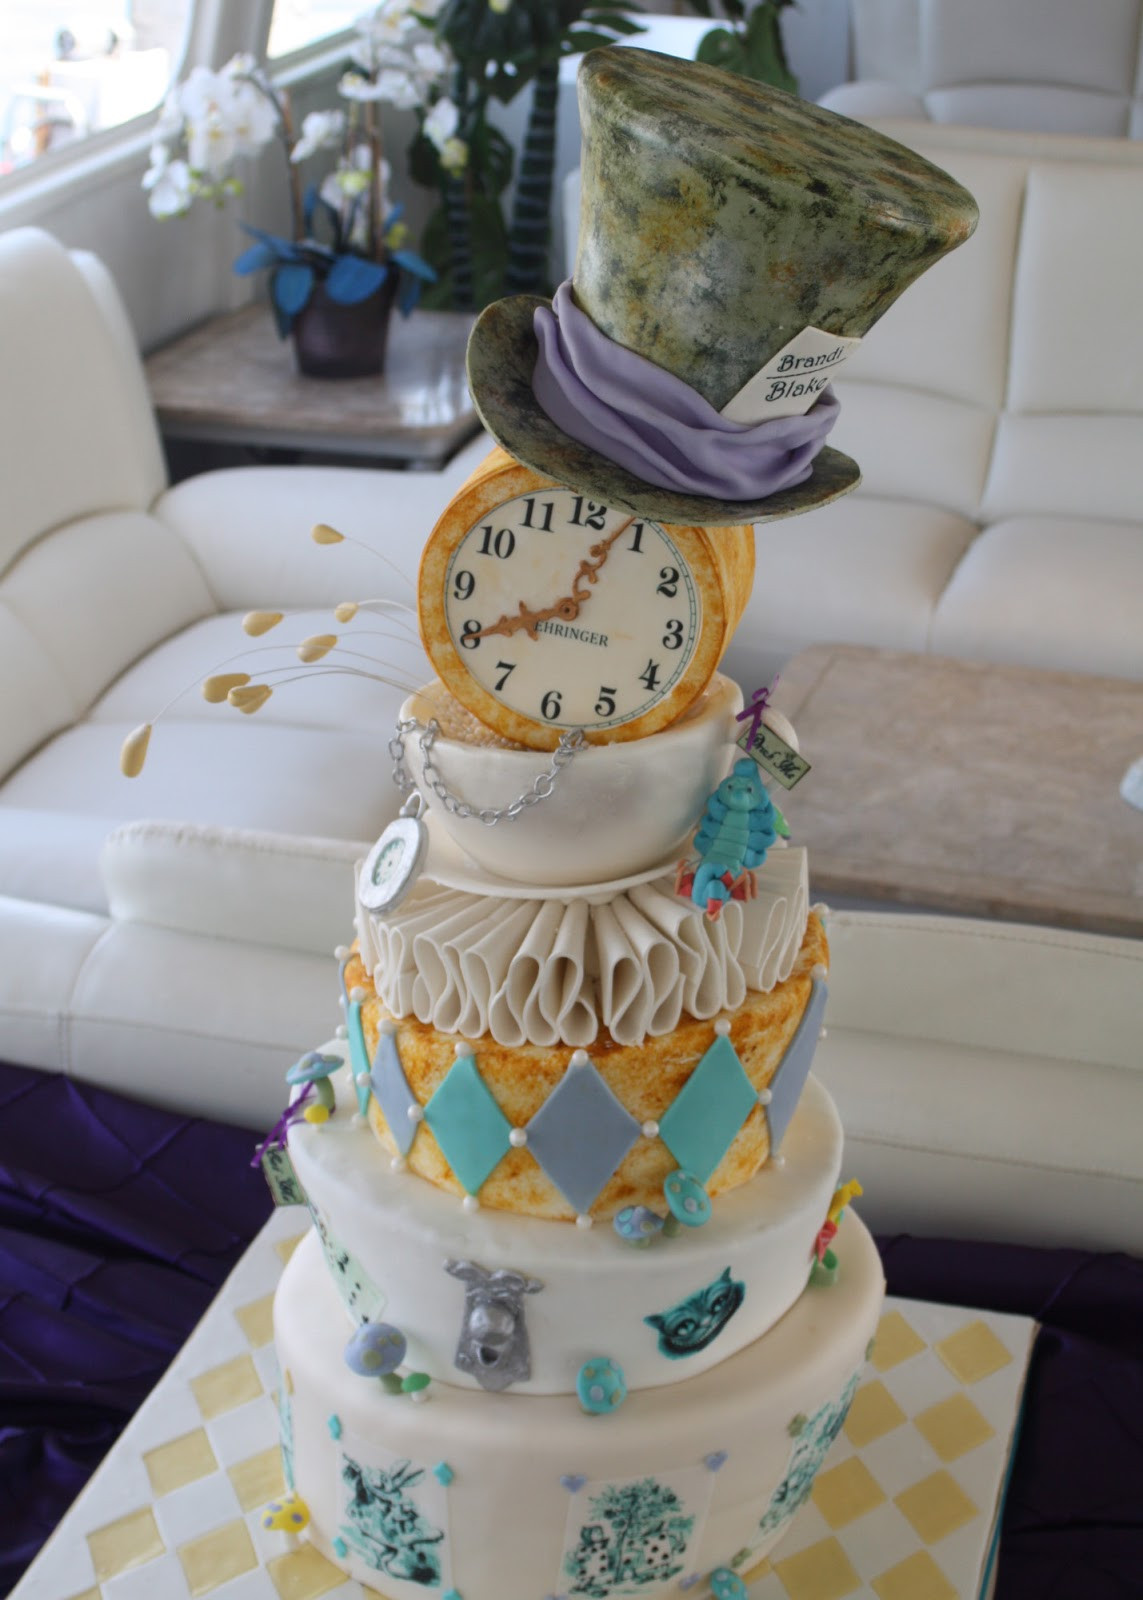 Wedding Wonderland Cakes
 Pastries By Vreeke Alice in Wonderland Wedding